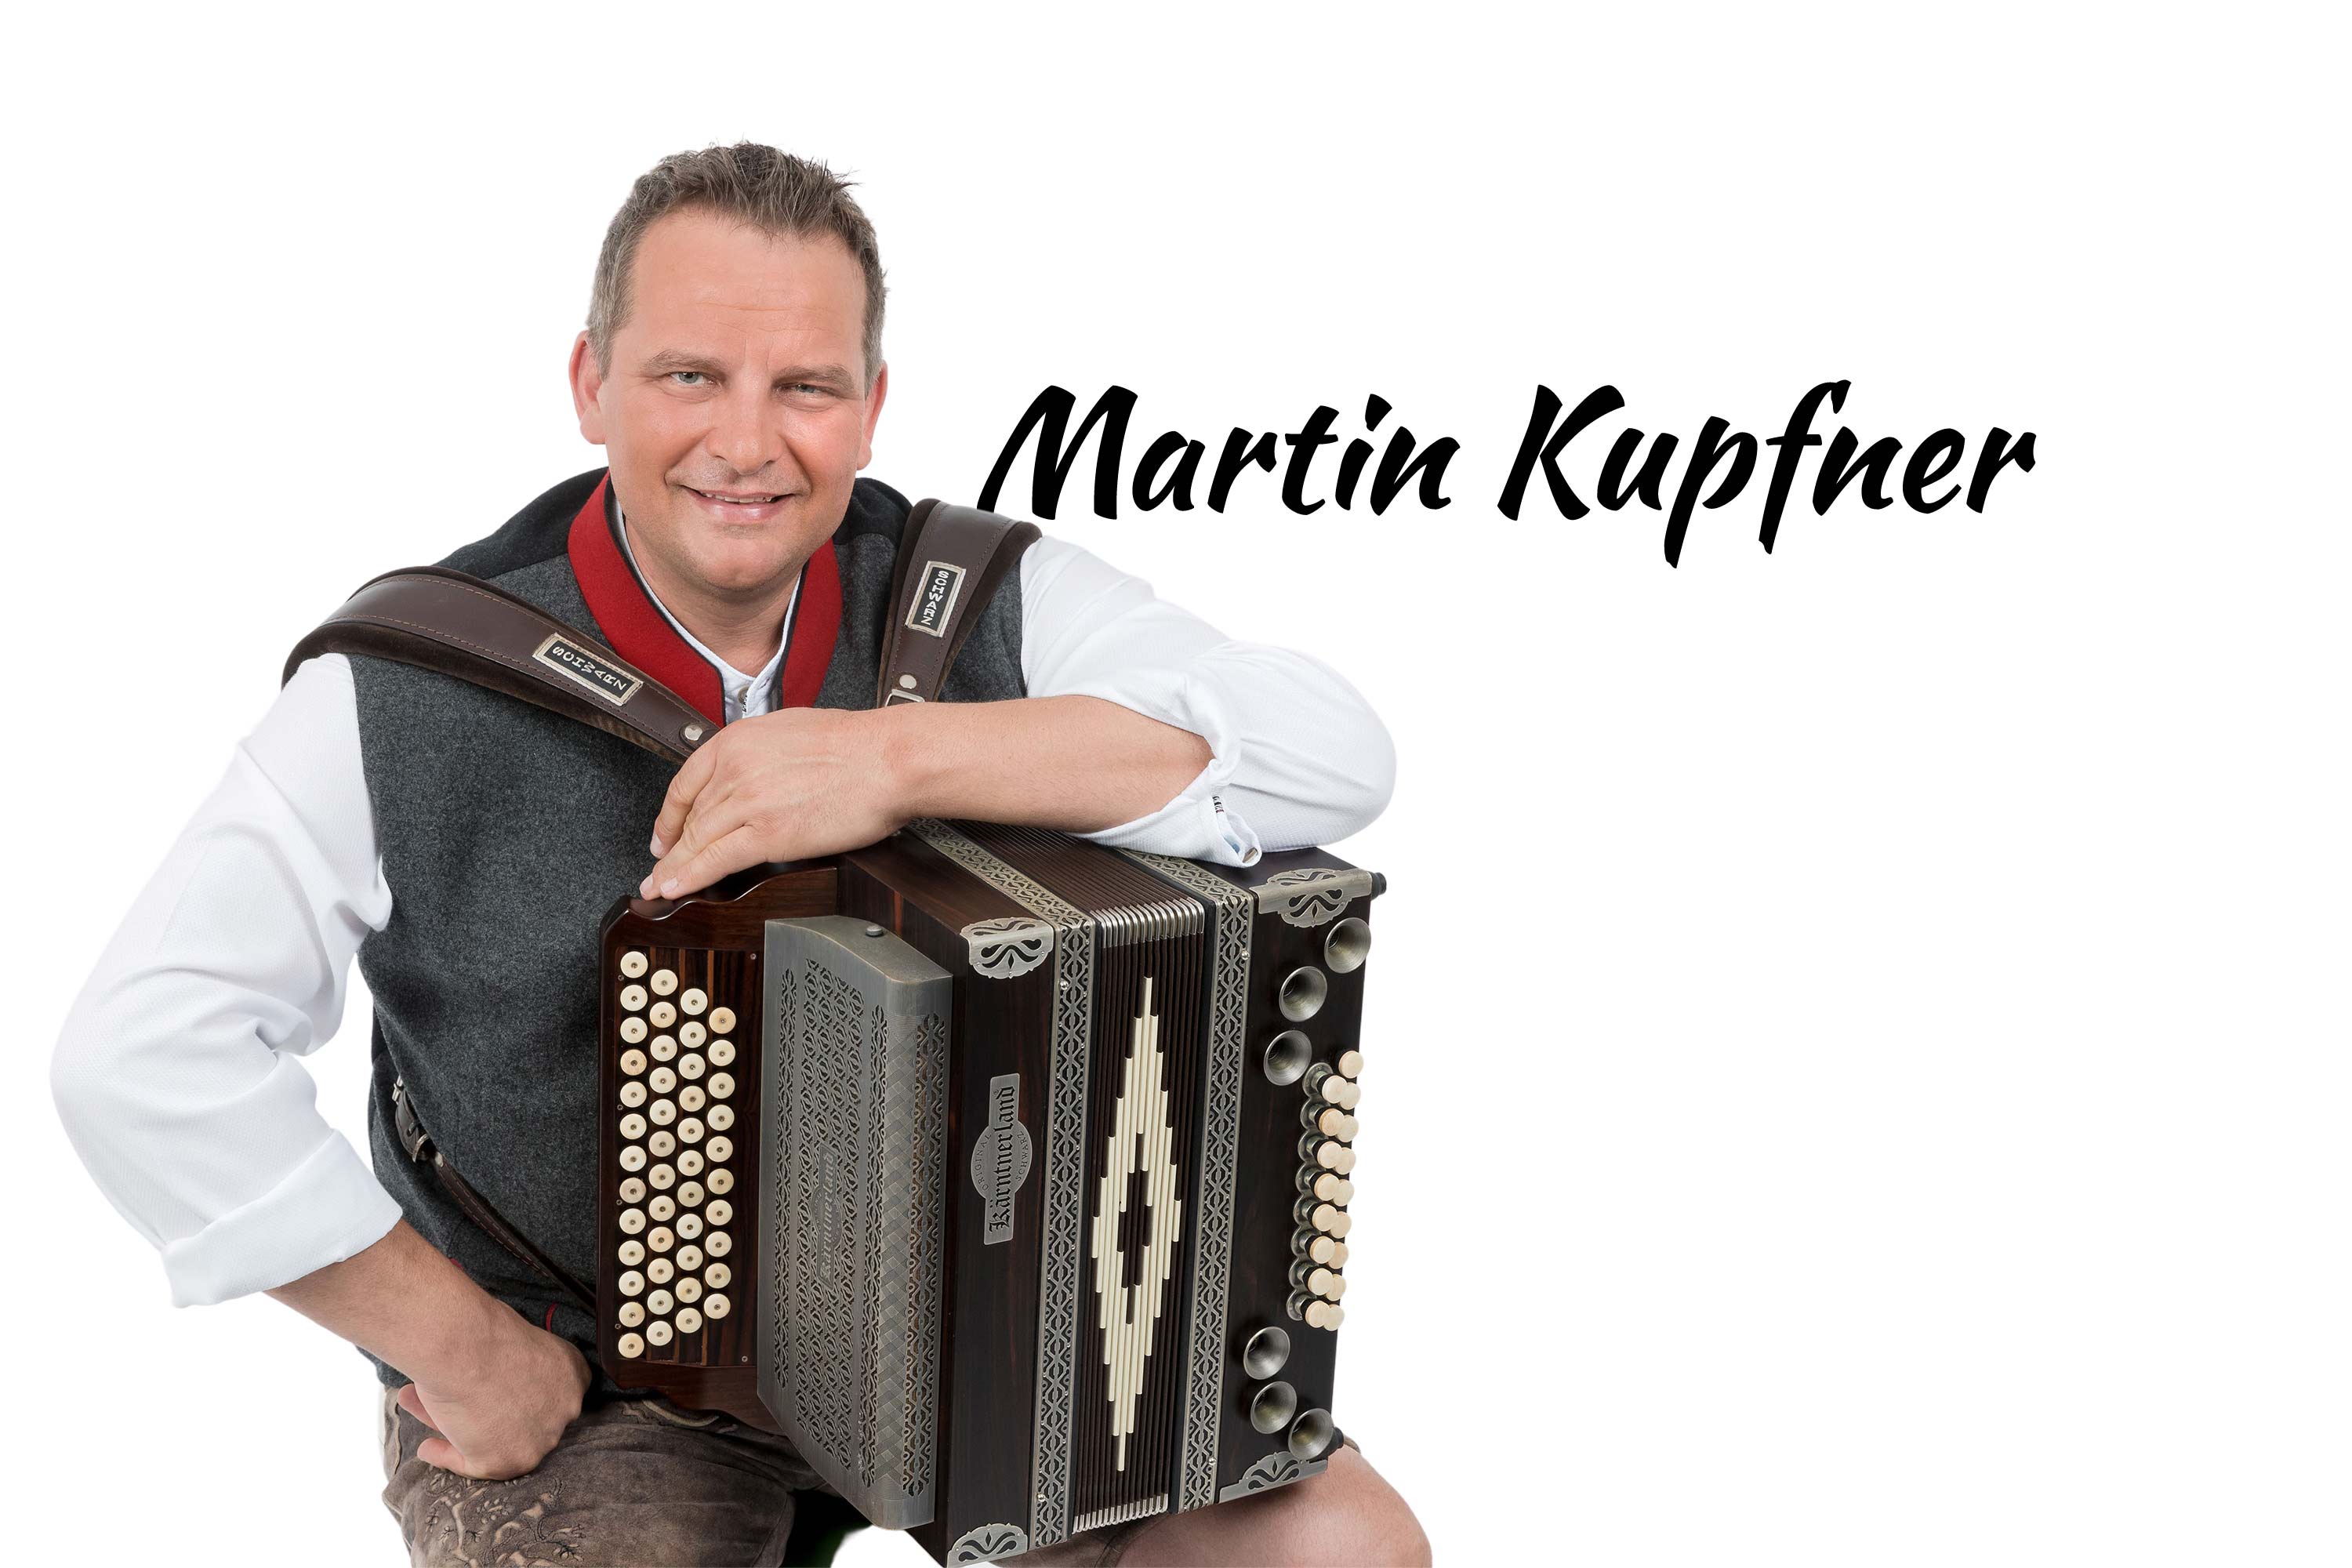 Martin Kupfner